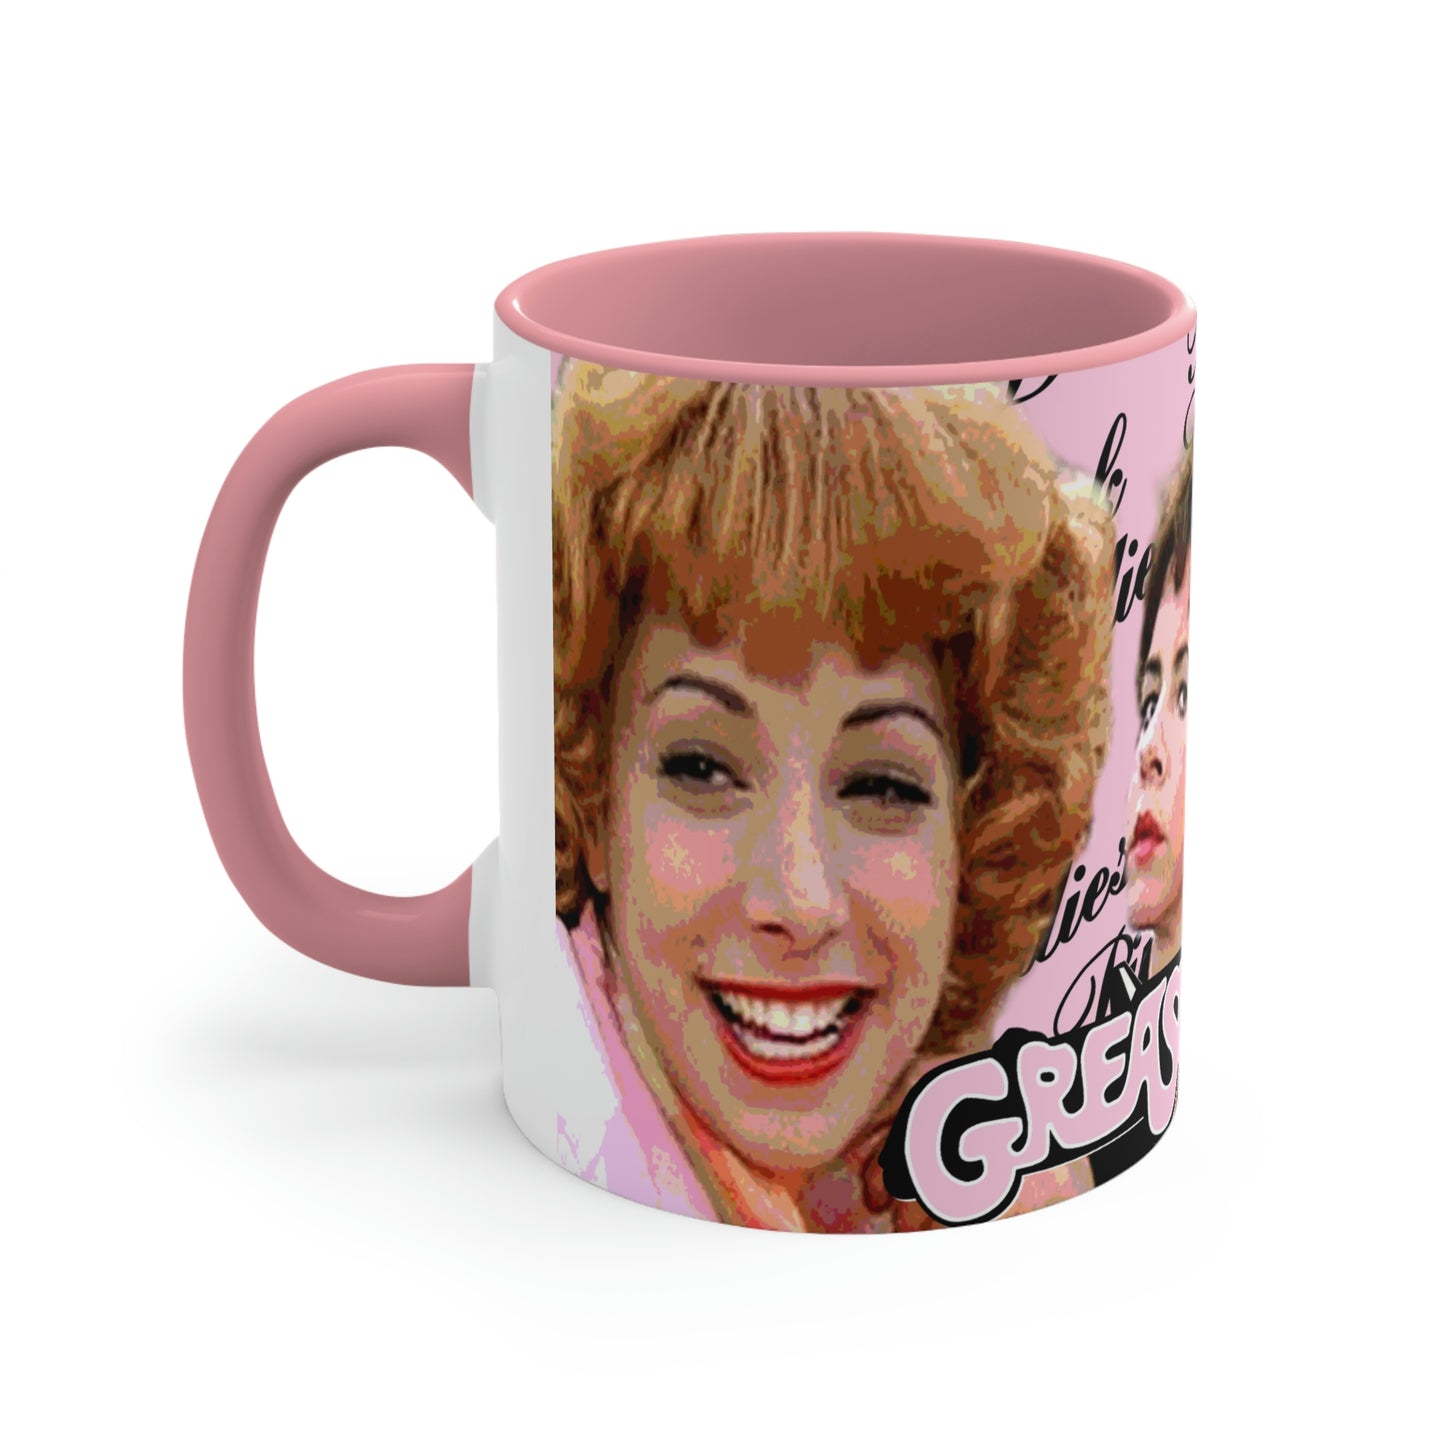 Grease Pink Ladies or T Birds Mug for Coffee or Tea